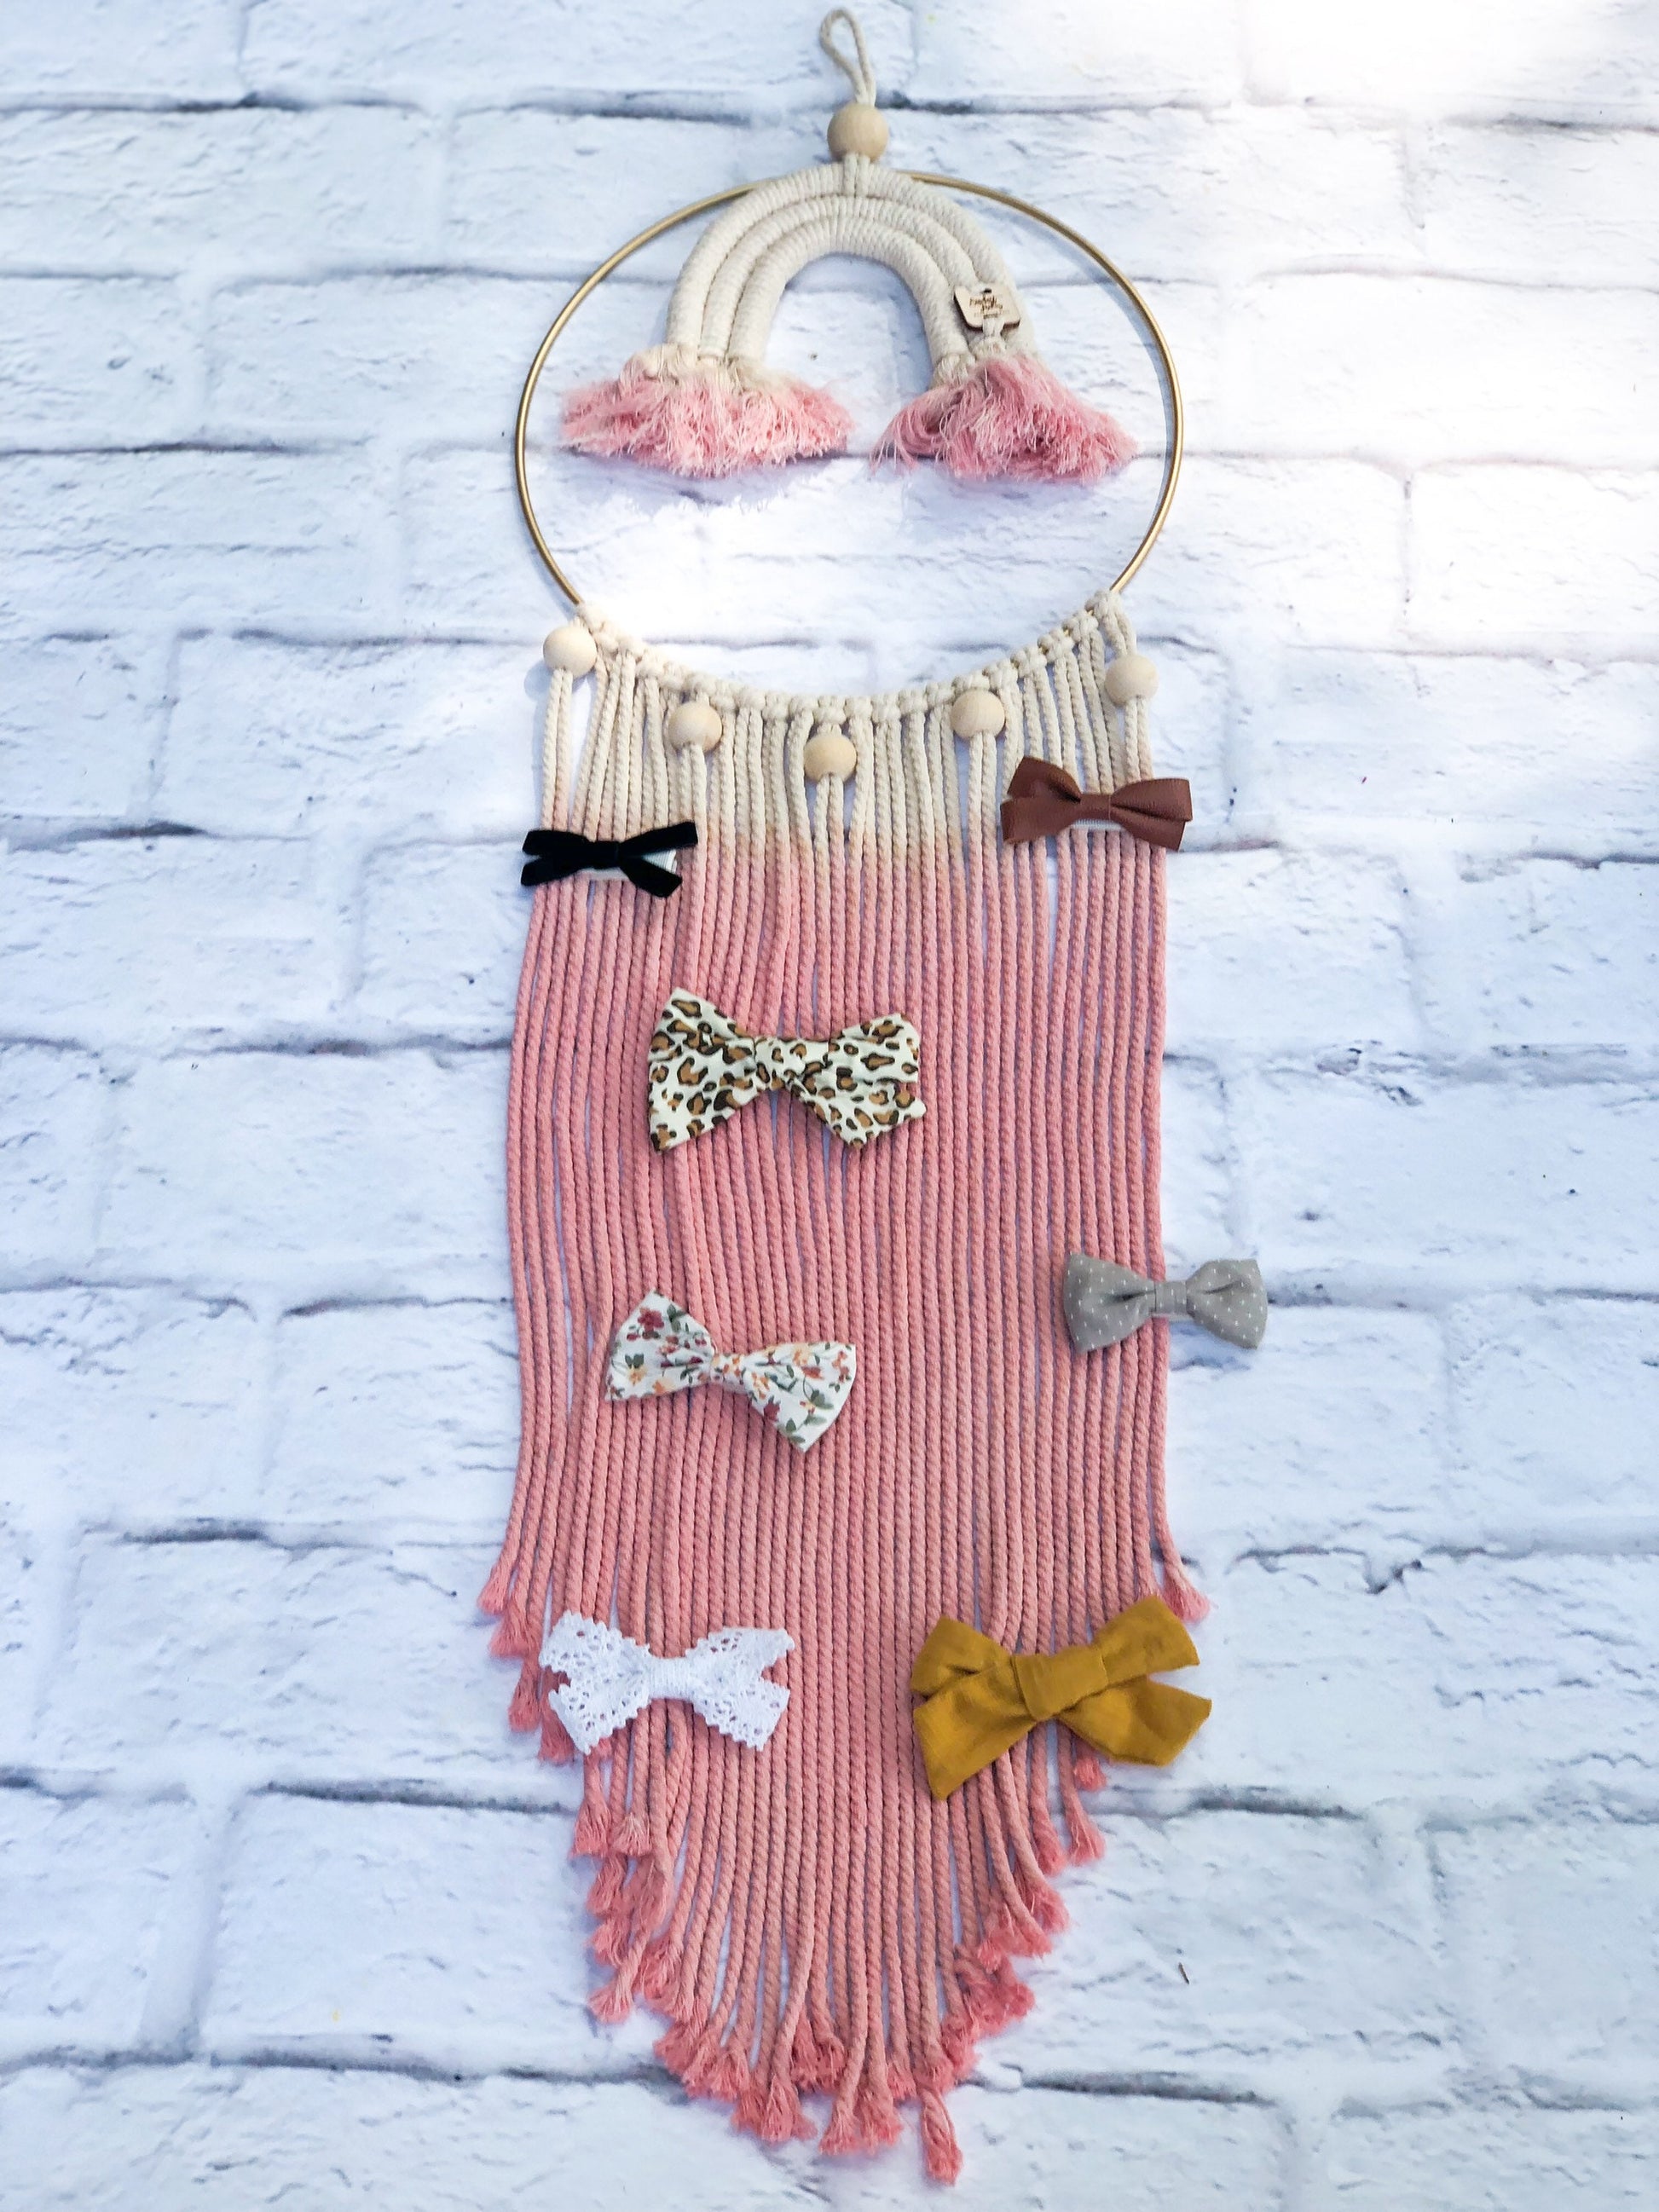 the hannah - rainbow wall hanging / hair bow holder – sawdust junkies  nashville chic